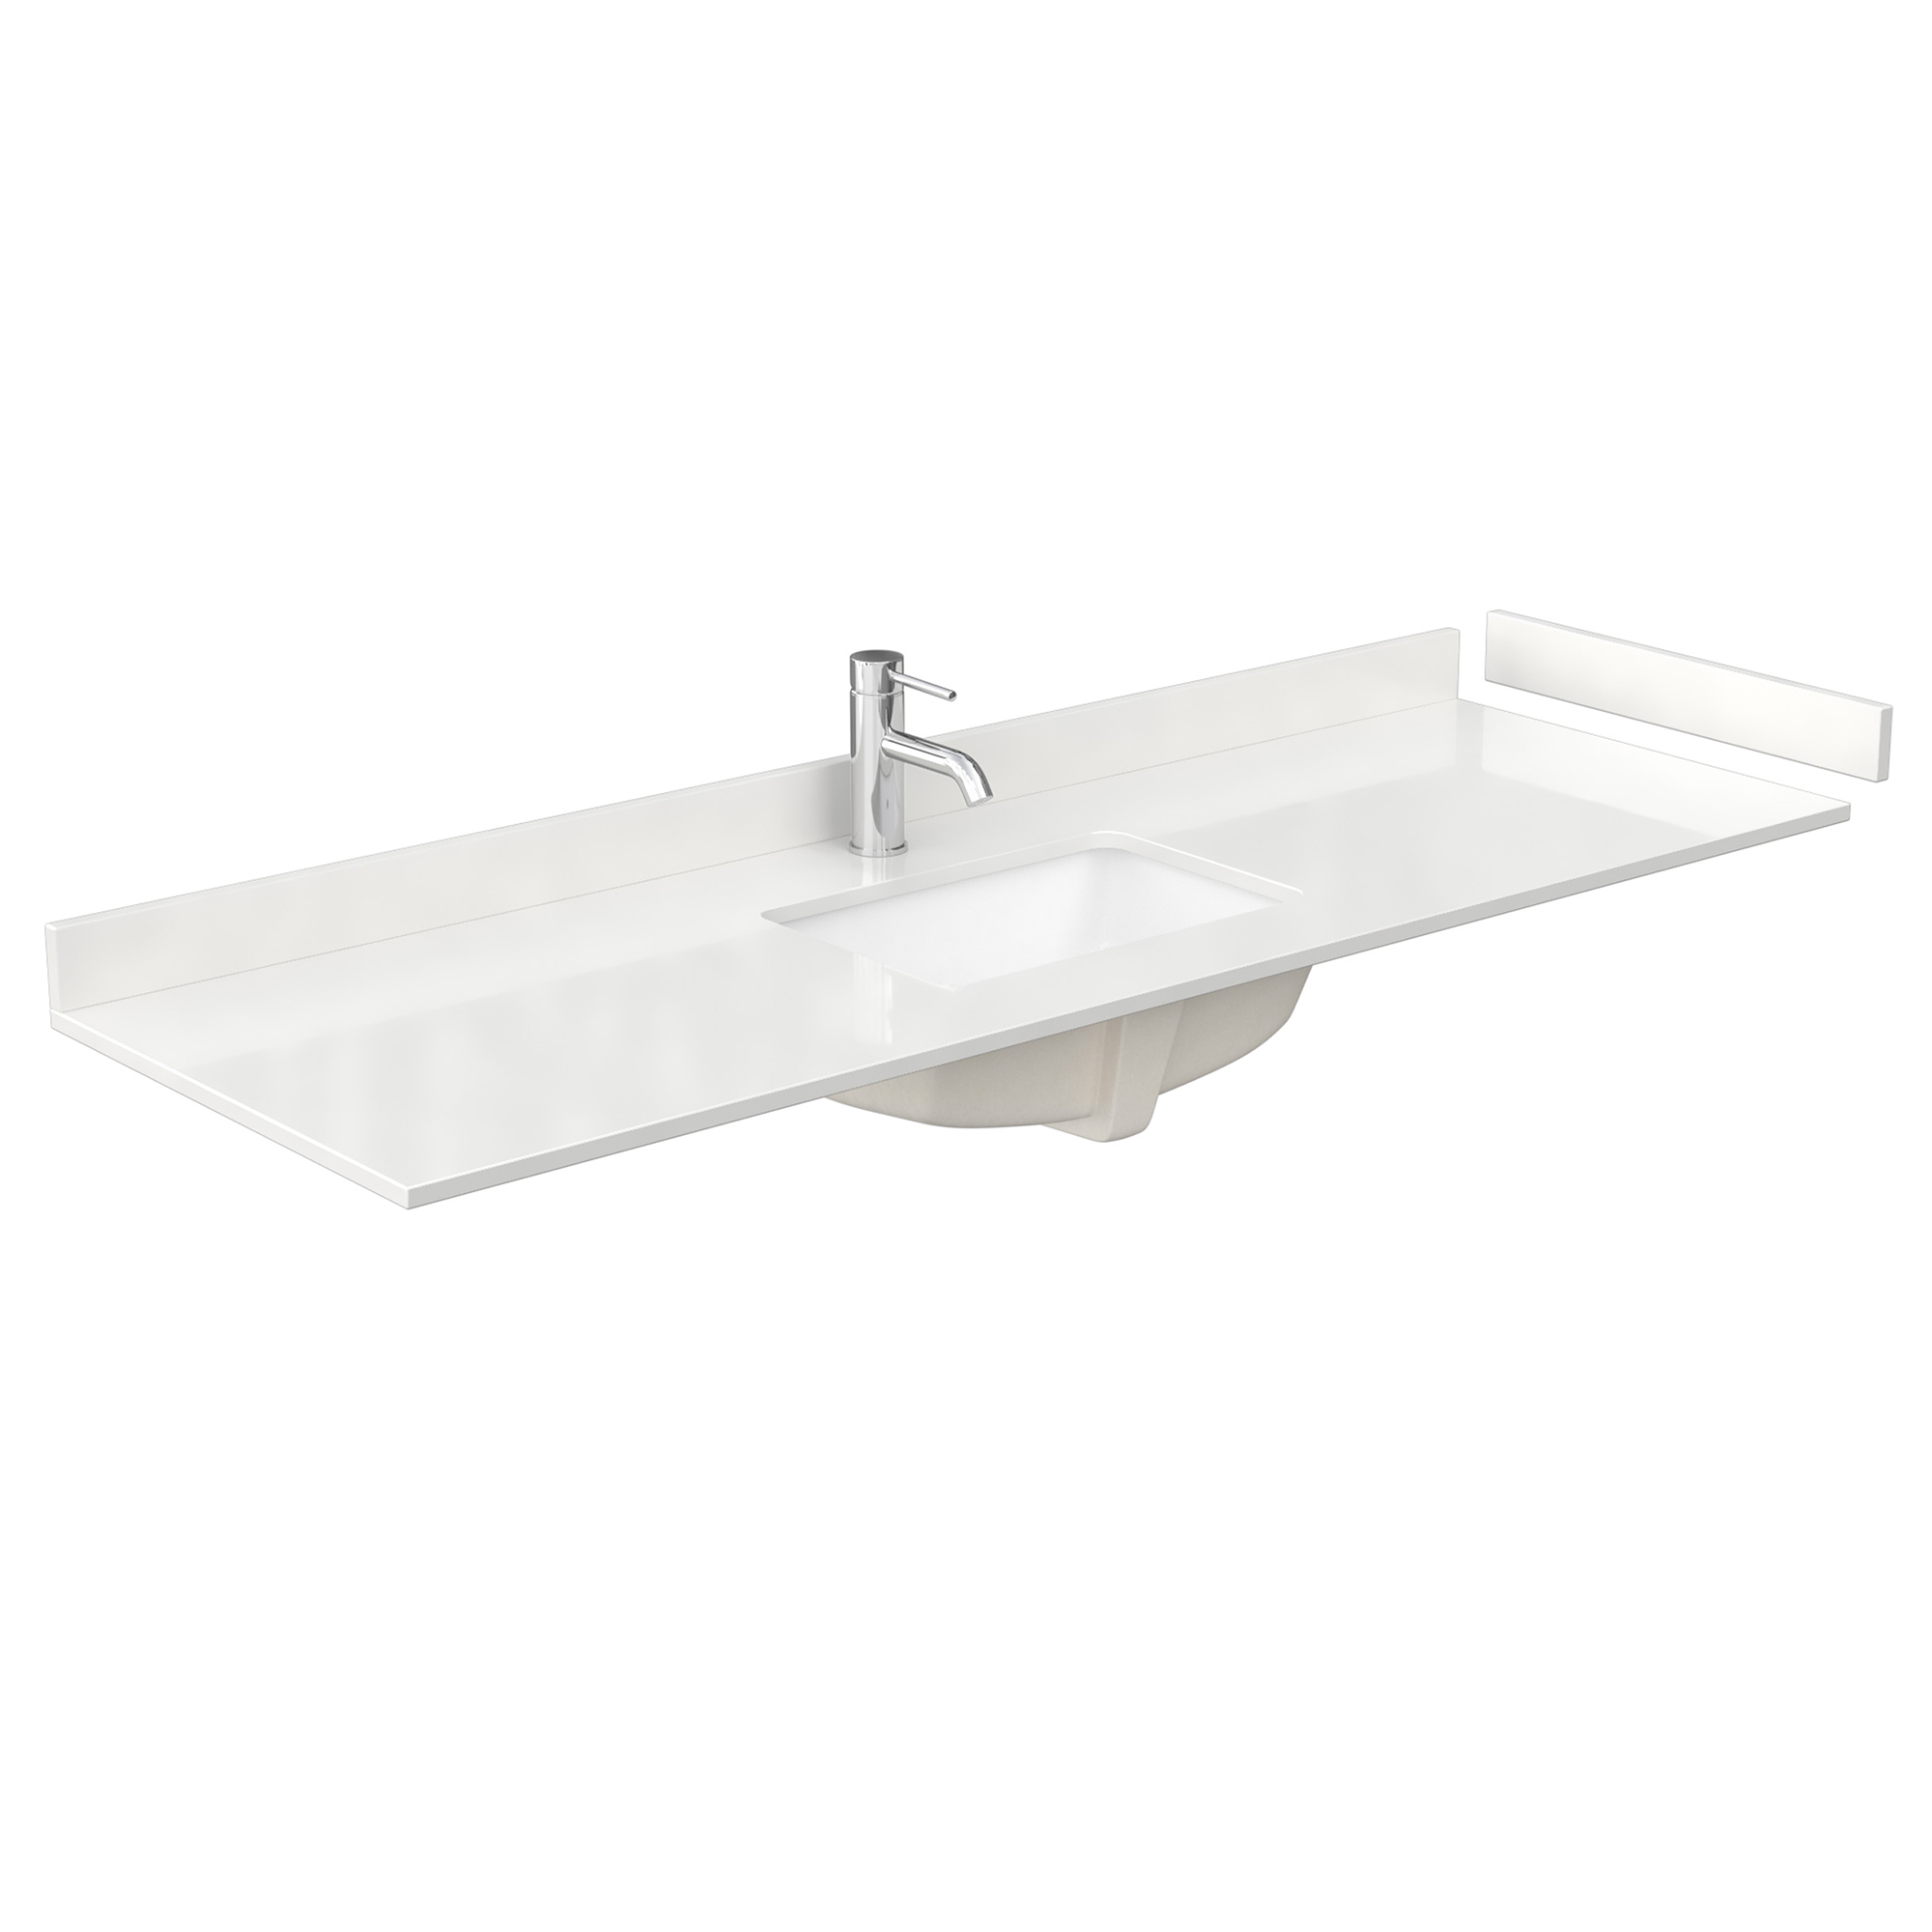 66" single countertop - white quartz (1000) with undermount square sink (1-hole) - includes backsplash and sidesplash